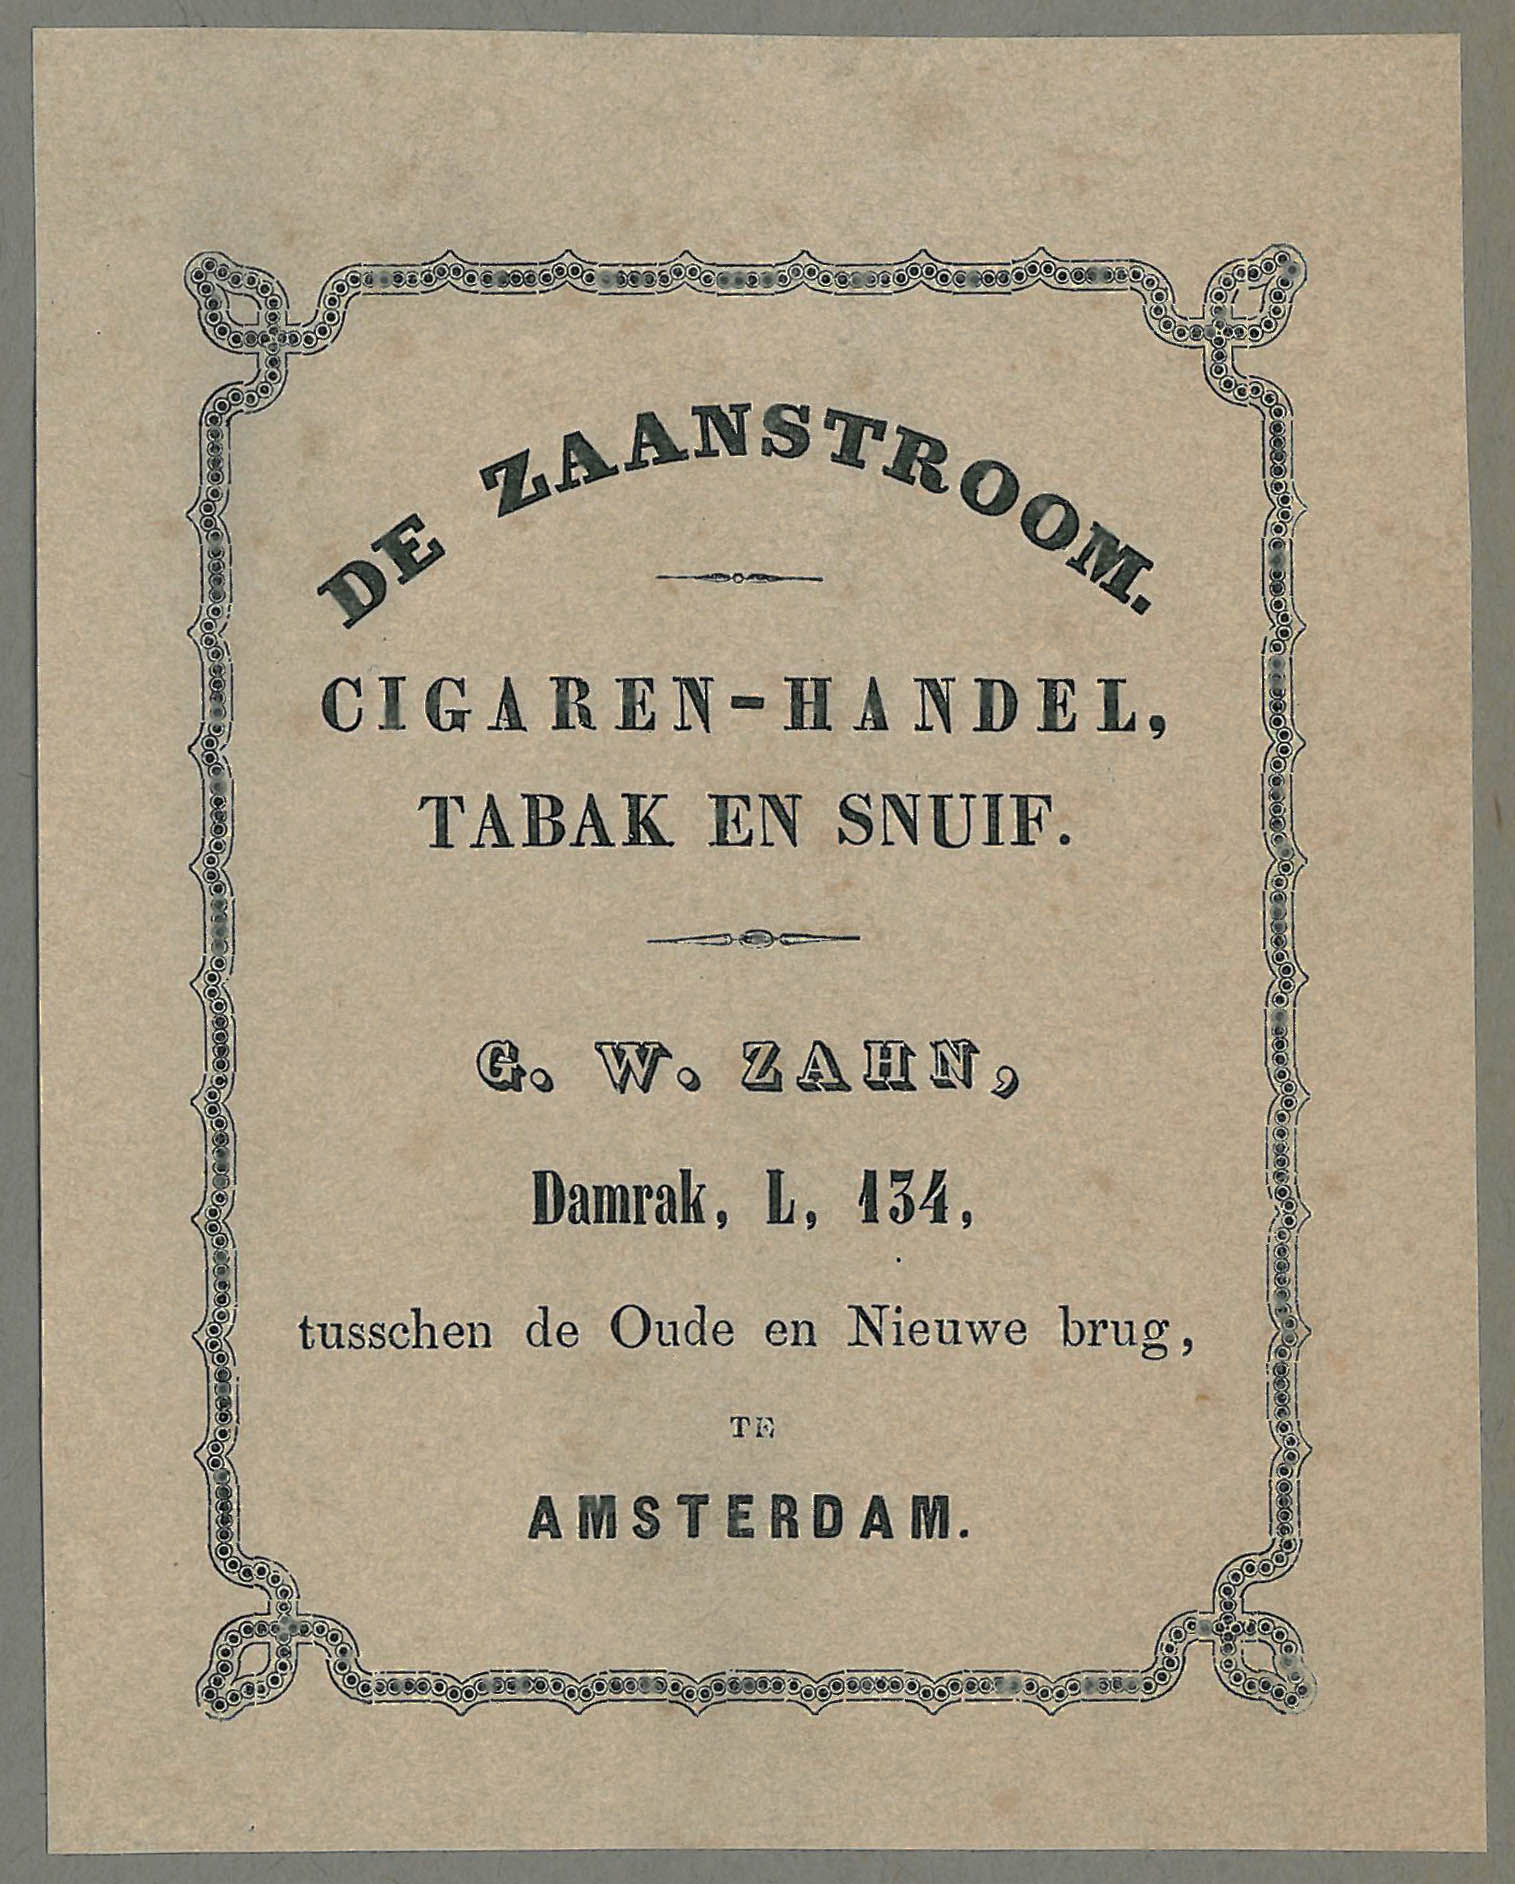 04-26.901-amsterdam-cigar-bag-text-amsterdam